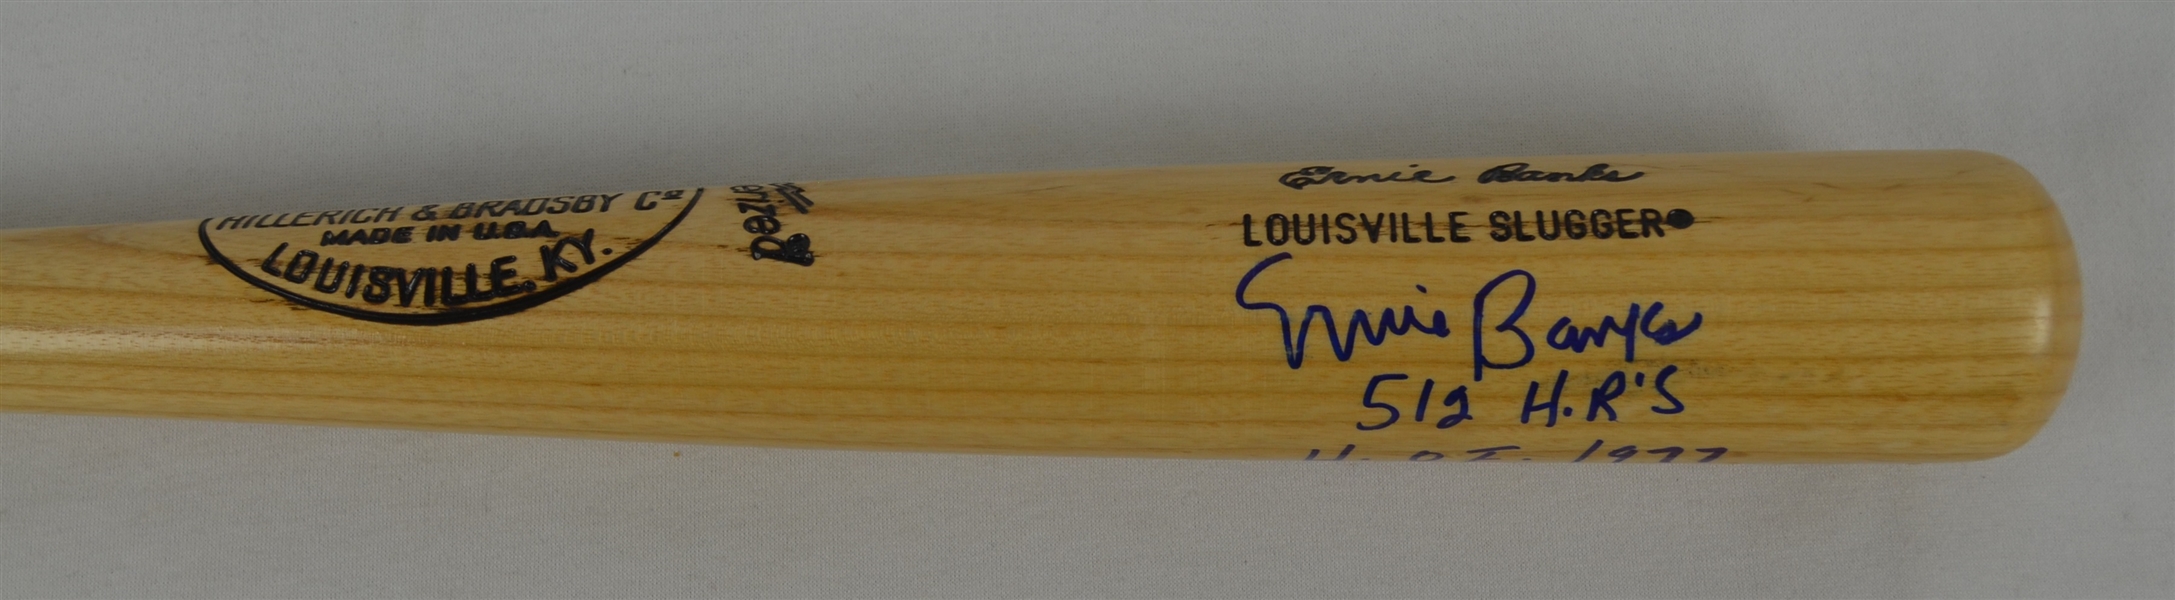 Ernie Banks Autographed & Inscribed 512 HR’s HOF 1977 Louisville Slugger Bat